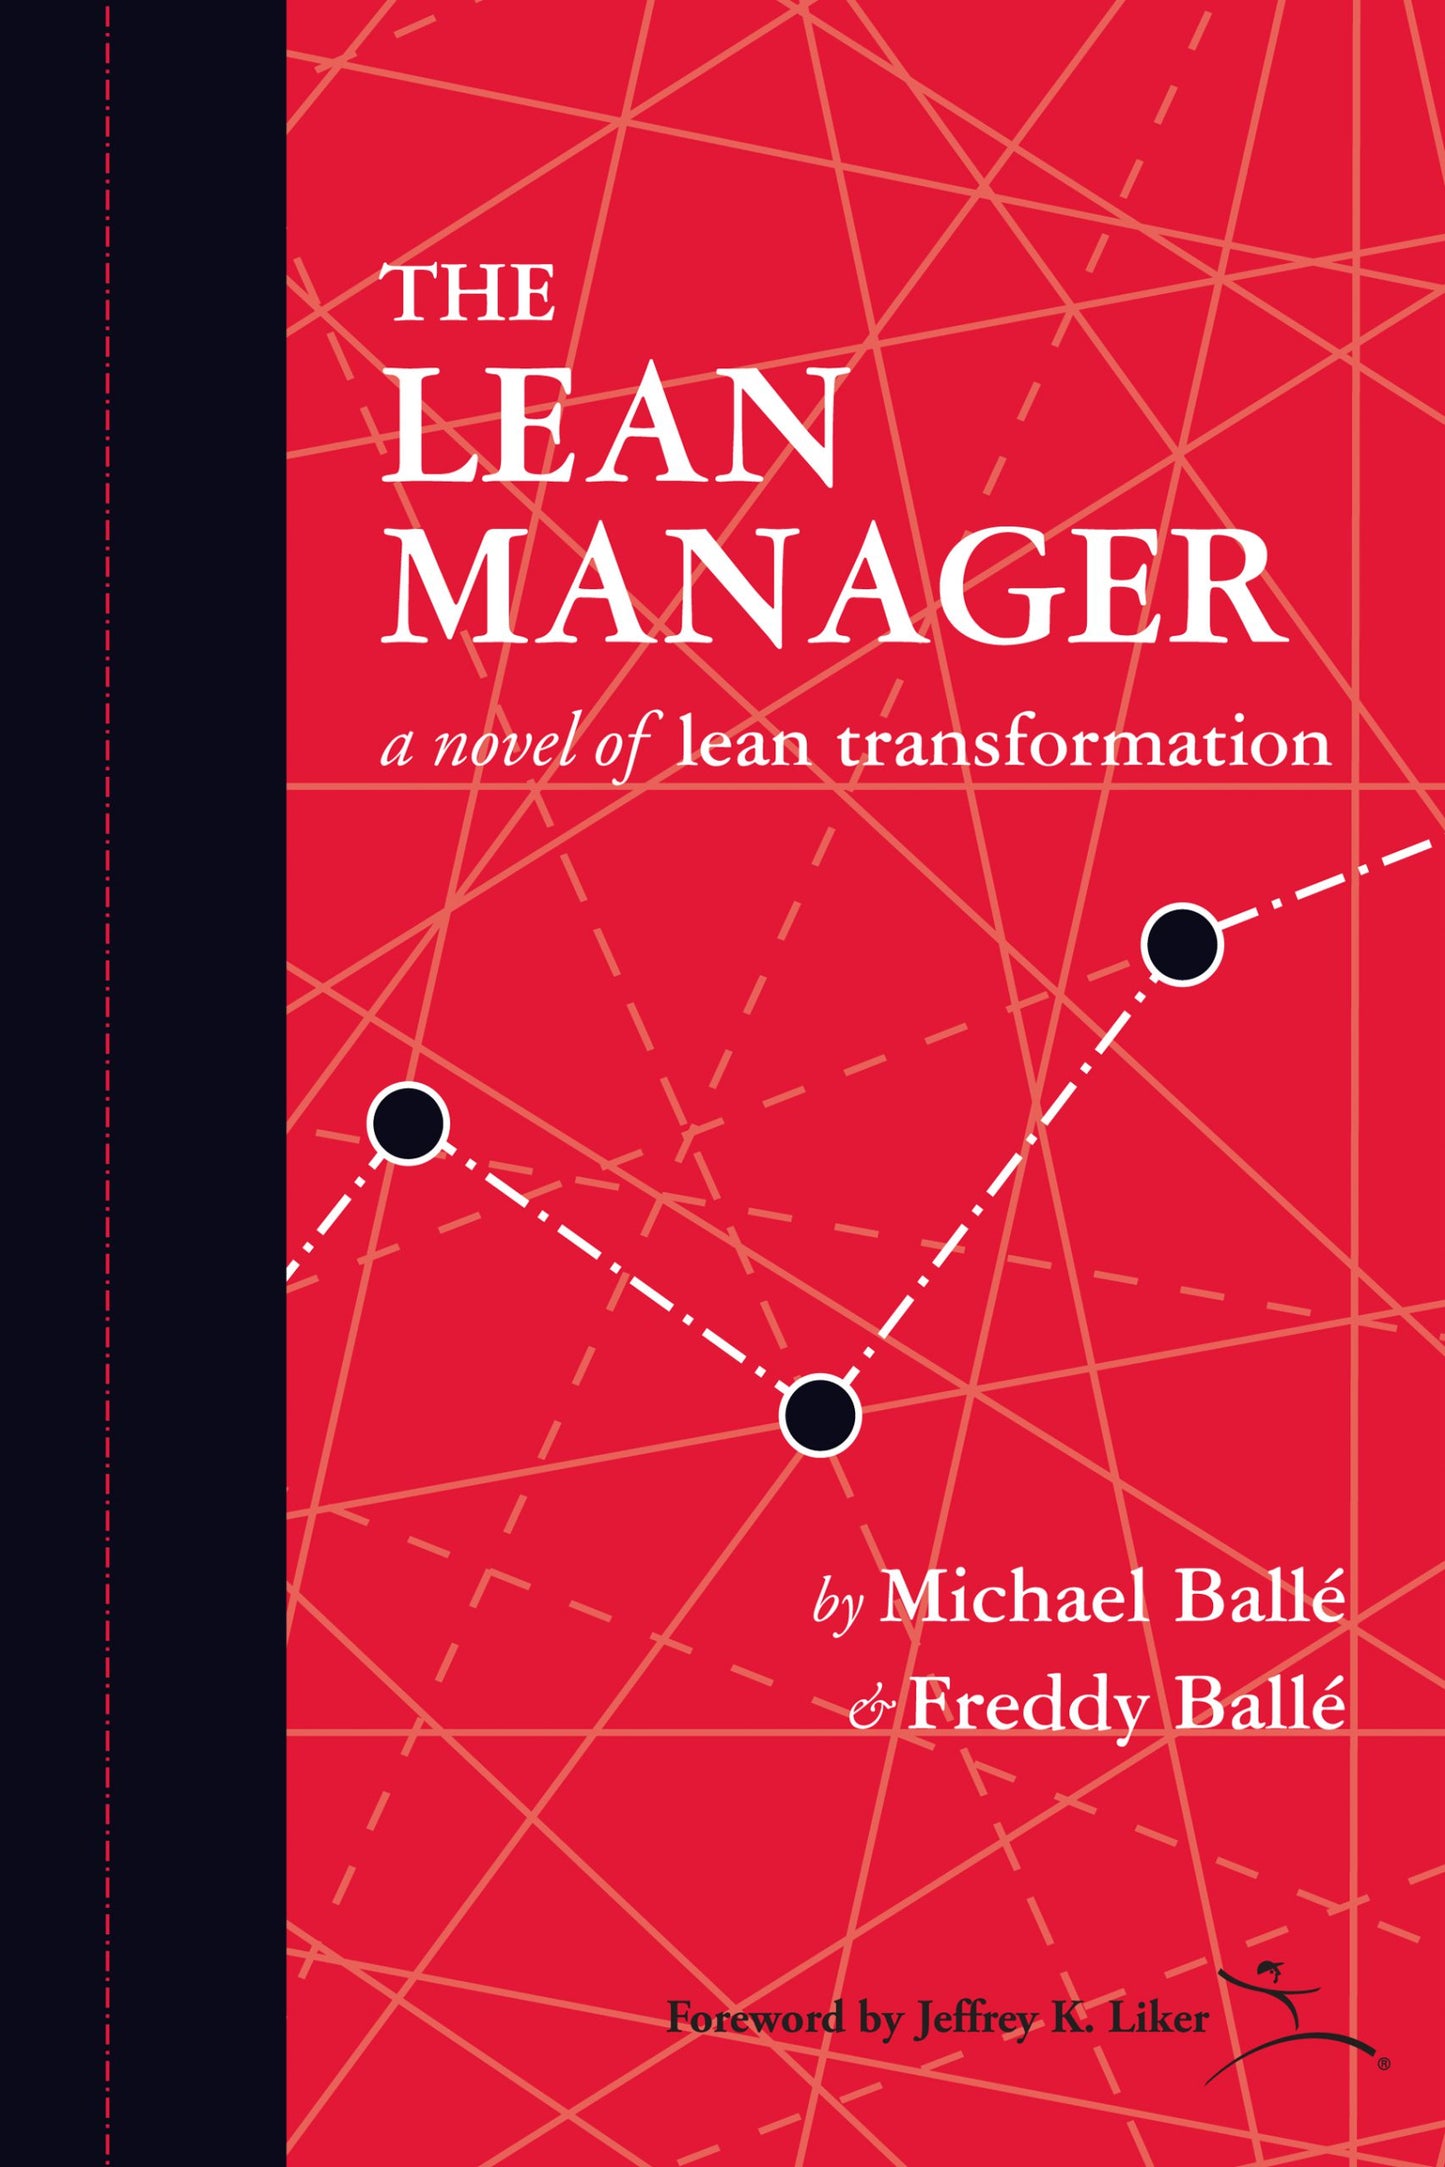 The Lean Manager: A Novel of Lean Transformation by Michael Ballé, Freddy Ballé, and Tom Ehrenfeld